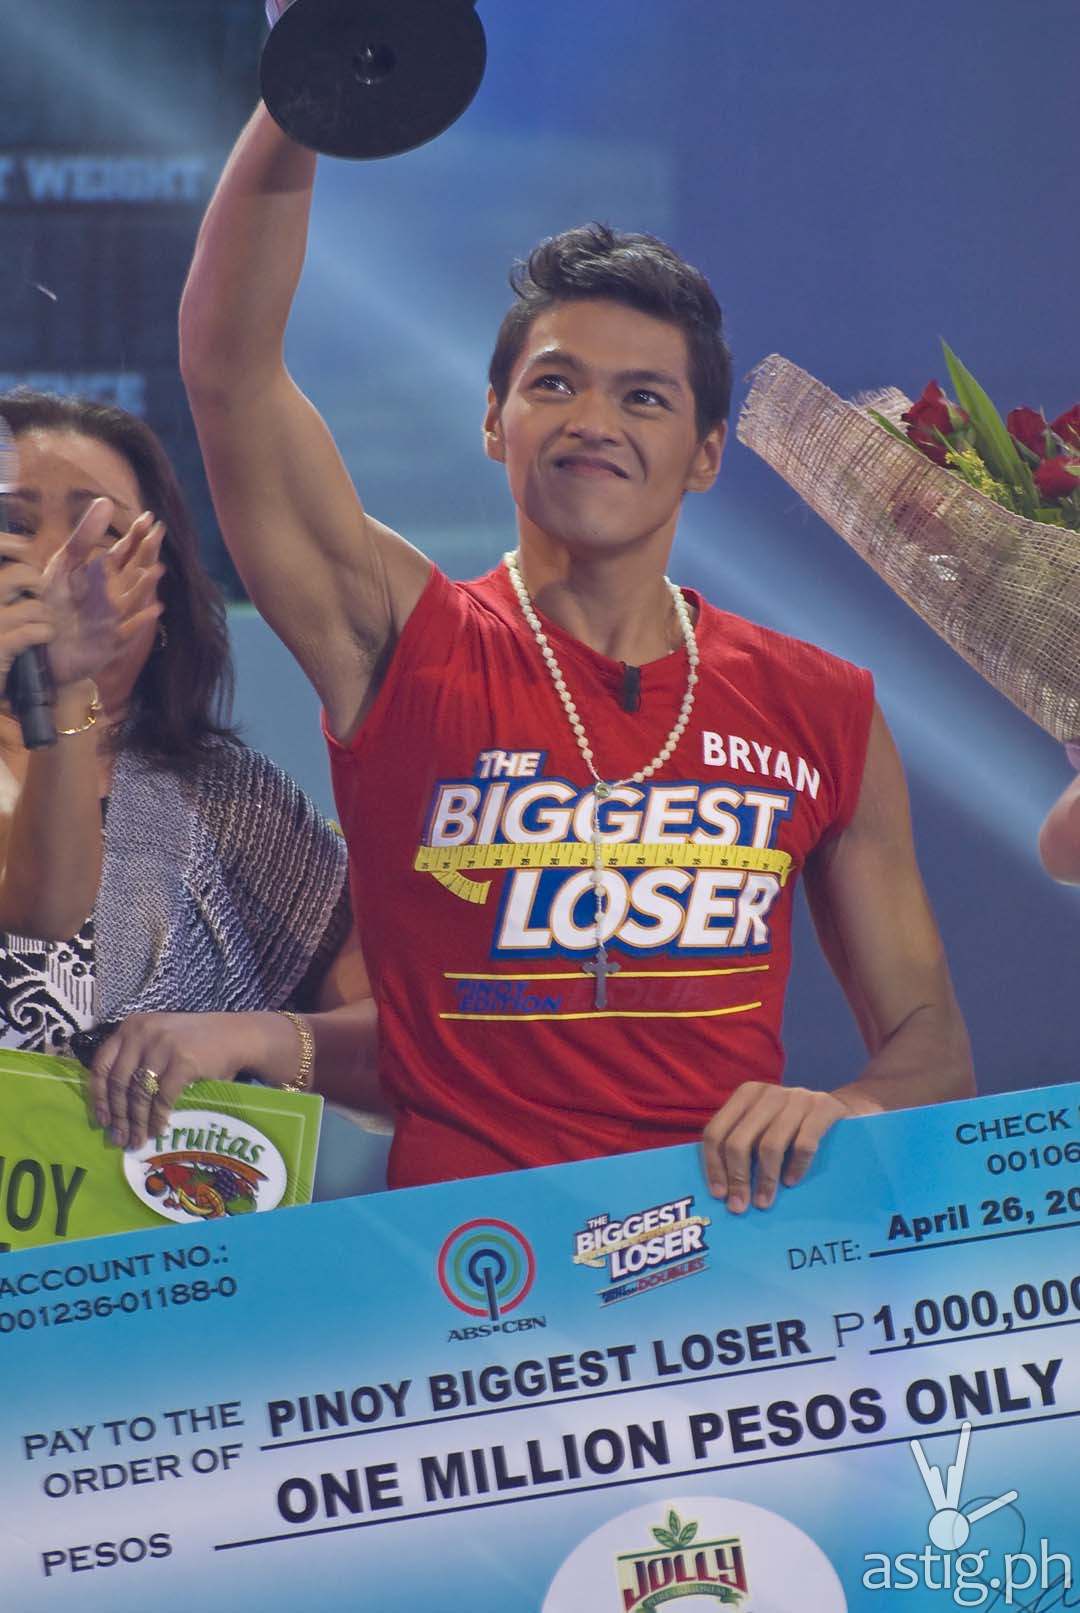 Pinoy Biggest Loser Bryan Castillo